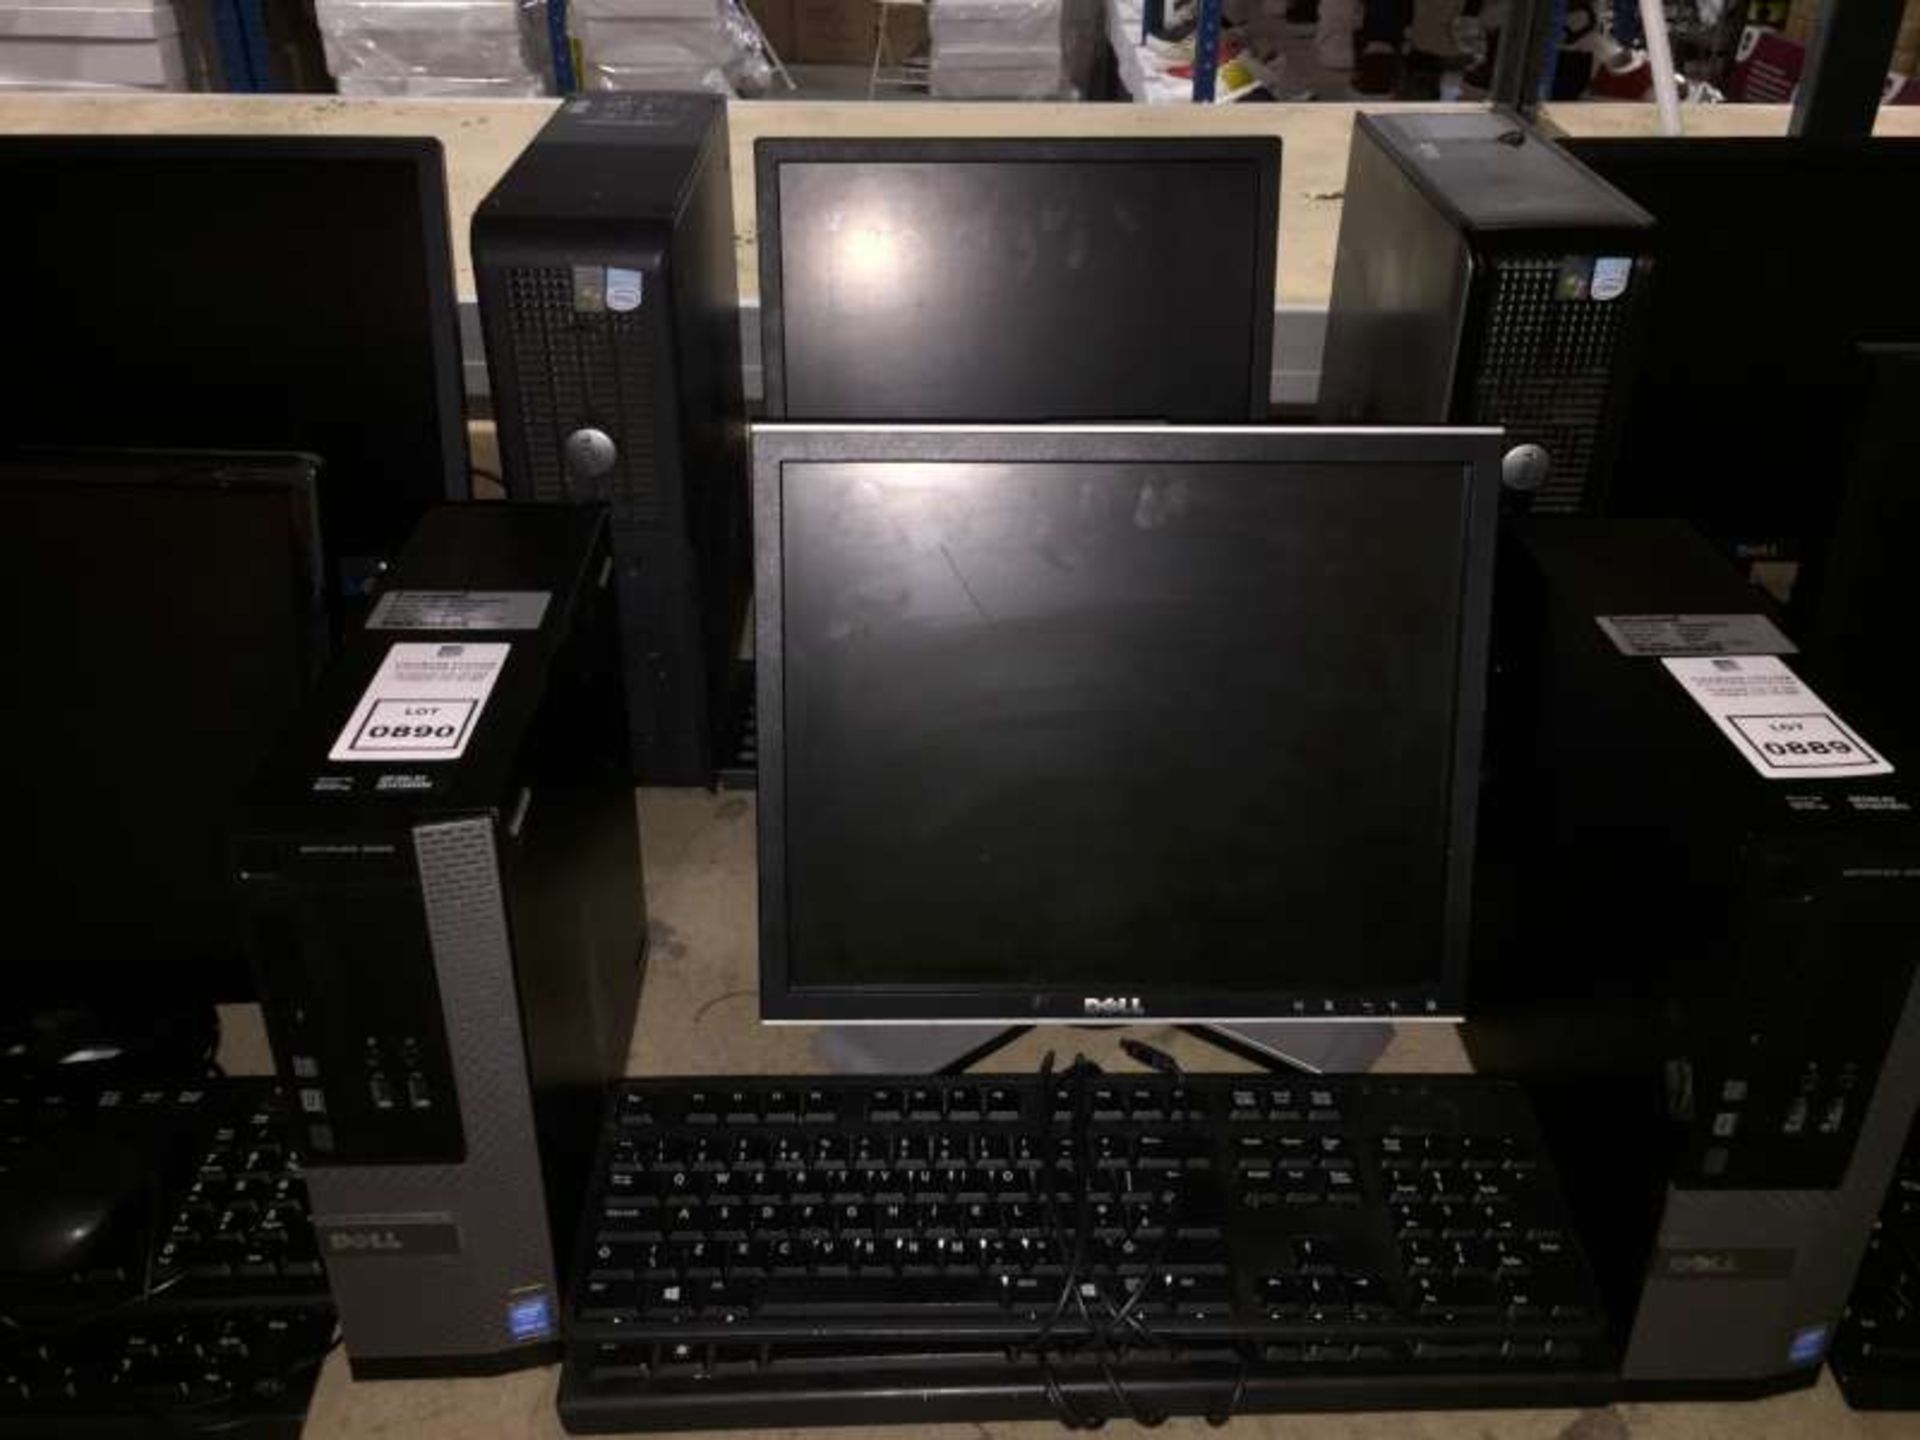 2 X DELL PC BASE UNITS WITH 2 X DELL FLATSCREEN MONITORS, 3 X COMPUTER KEYBOARDS, 1 X COMPUTER